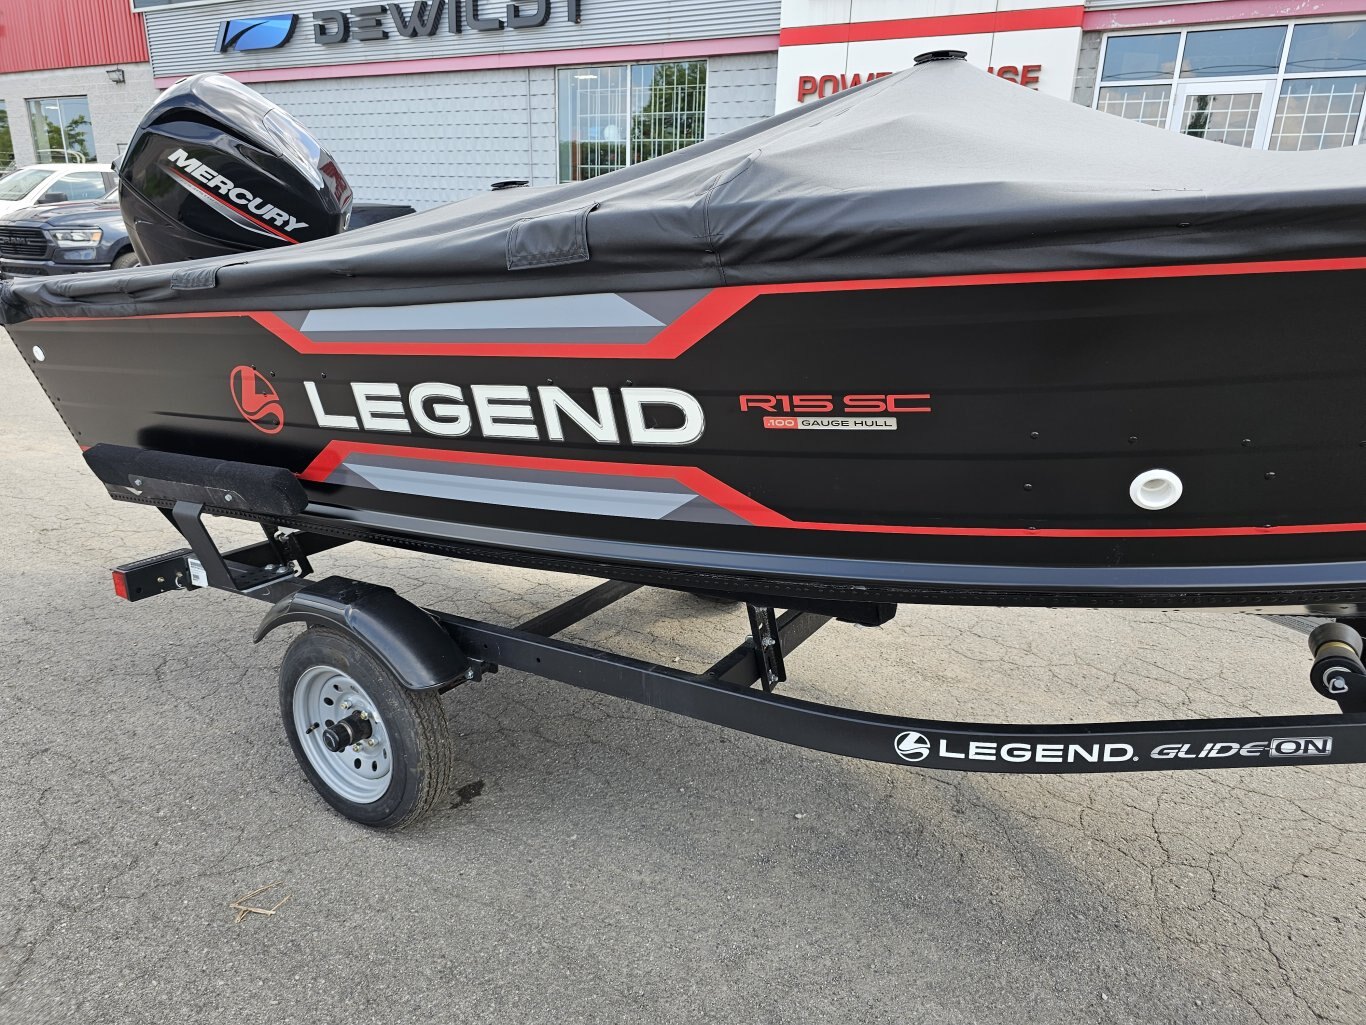 Legend Boats R SERIES R15 SC Save $1000!